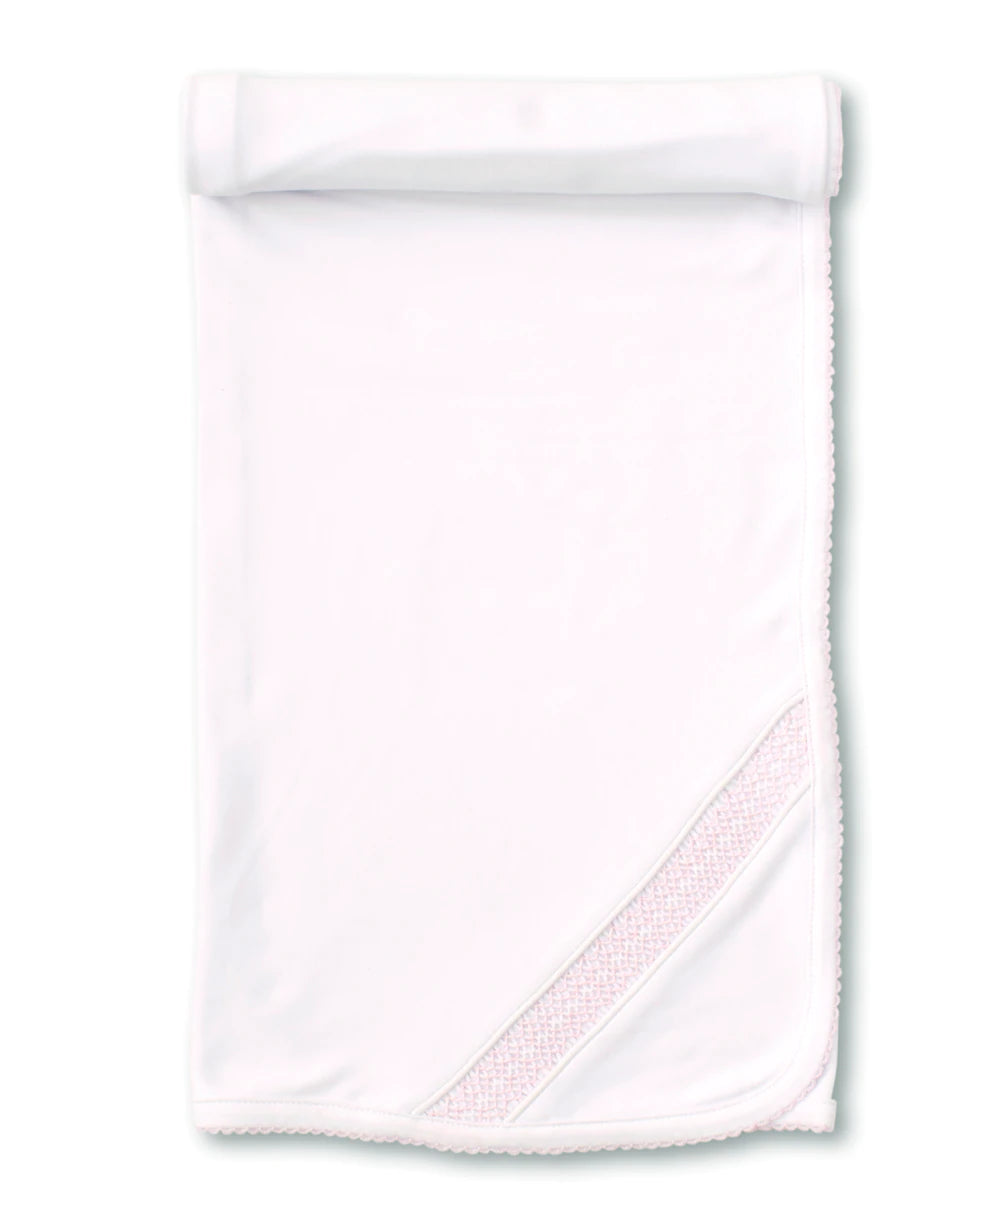 CLB Charmed Blanket - White/Pink - Breckenridge Baby